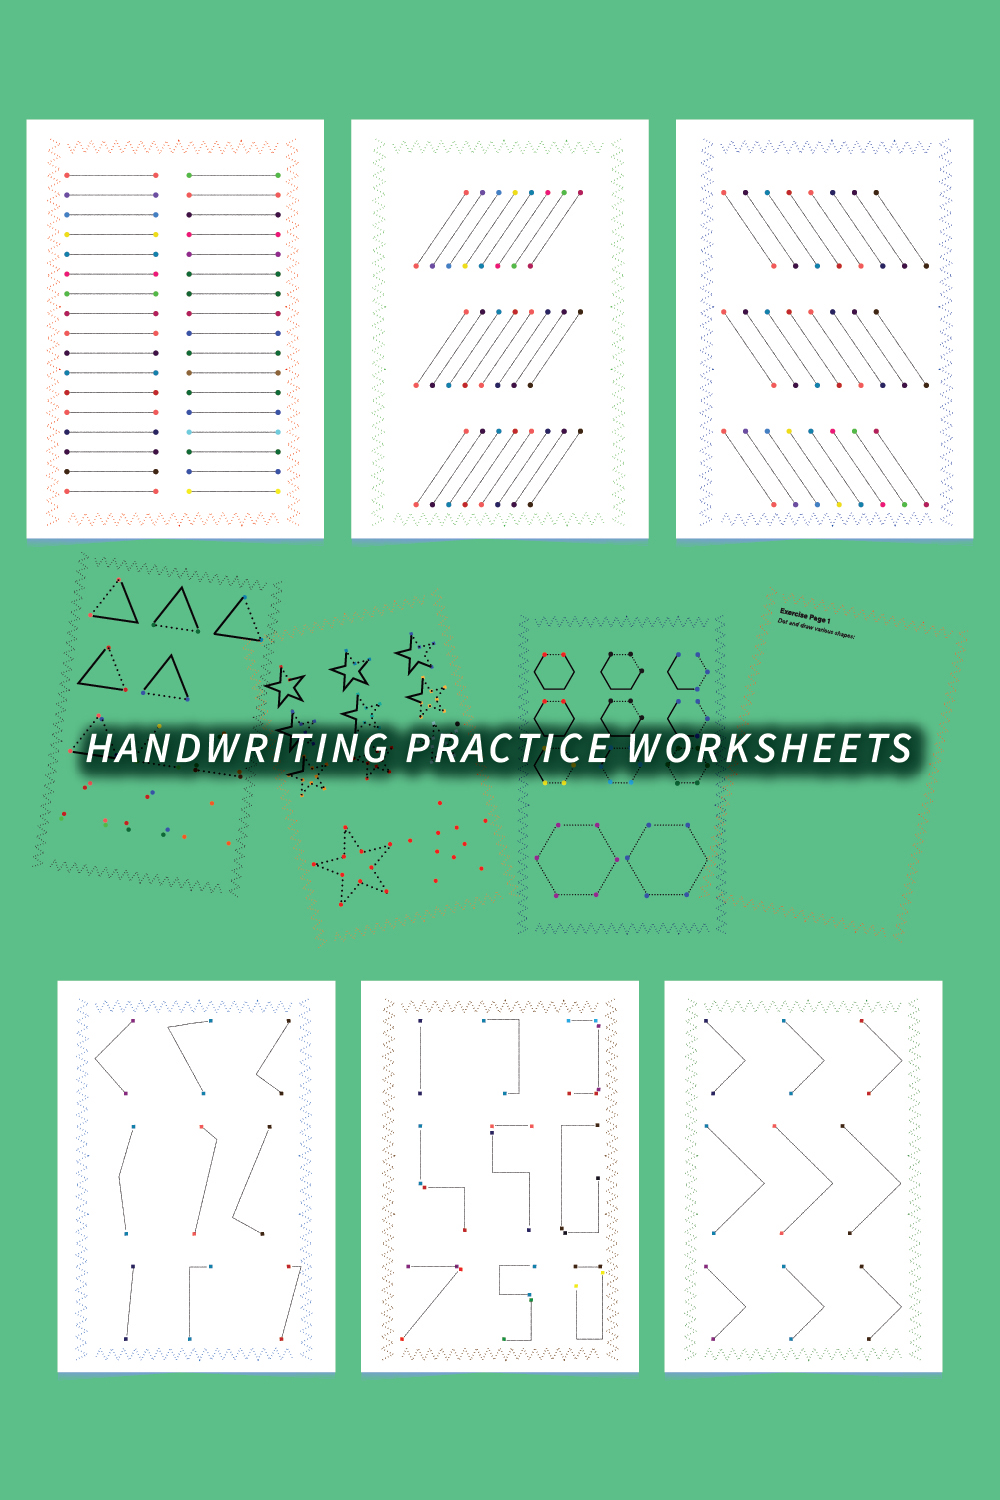 Handwriting Practice Worksheets pinterest preview image.